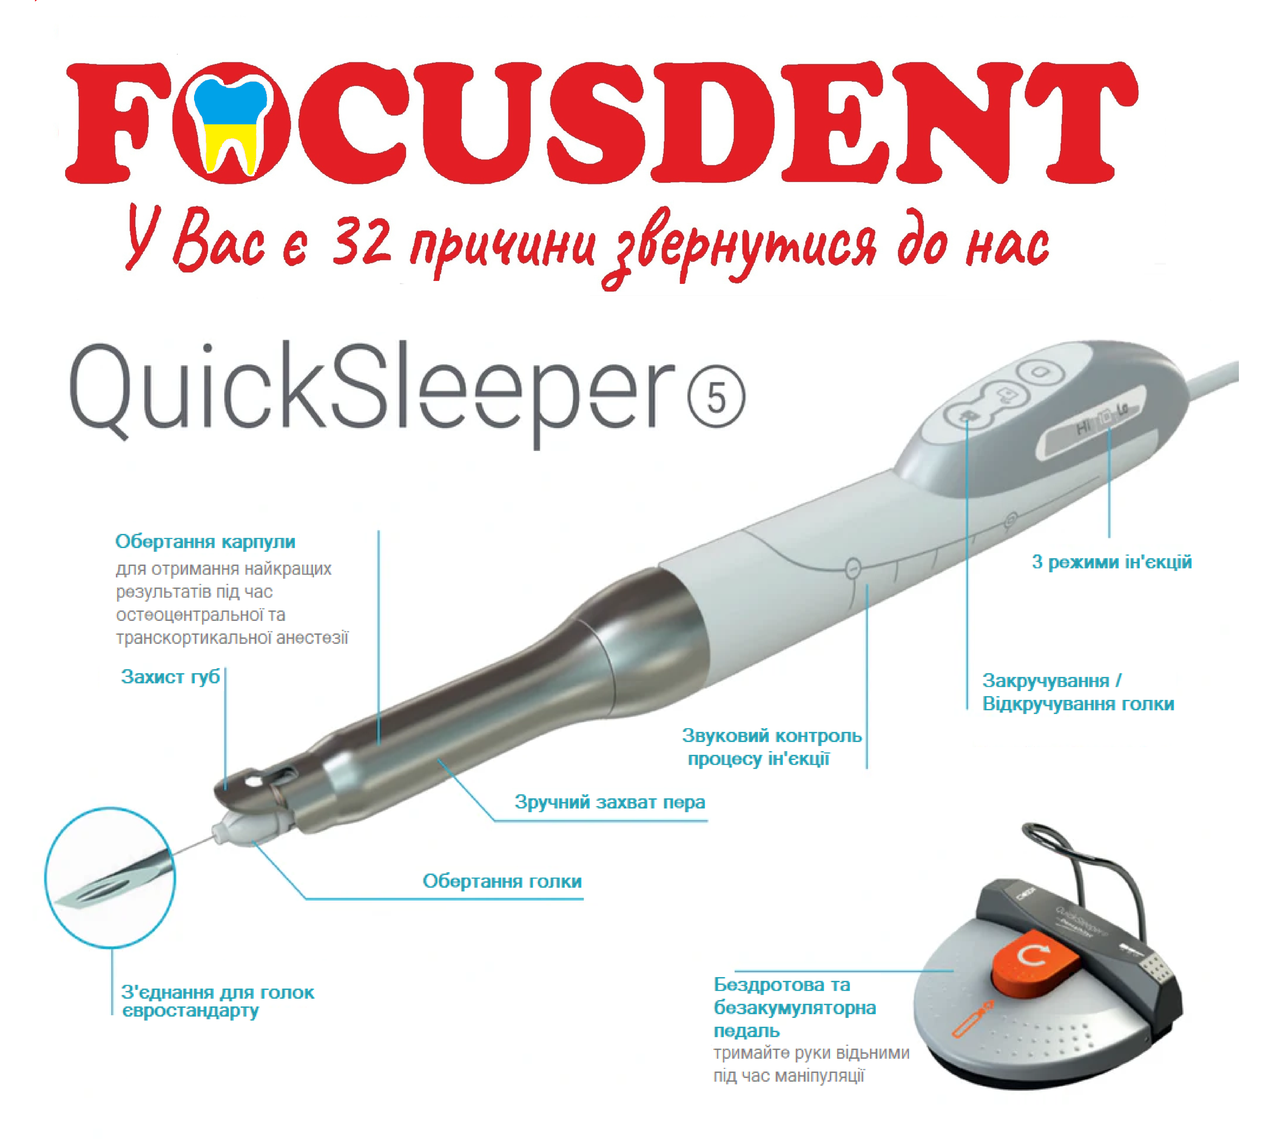 Quicksleeper 5 - апарат для анестезії | Dental HI TEC (Франція)